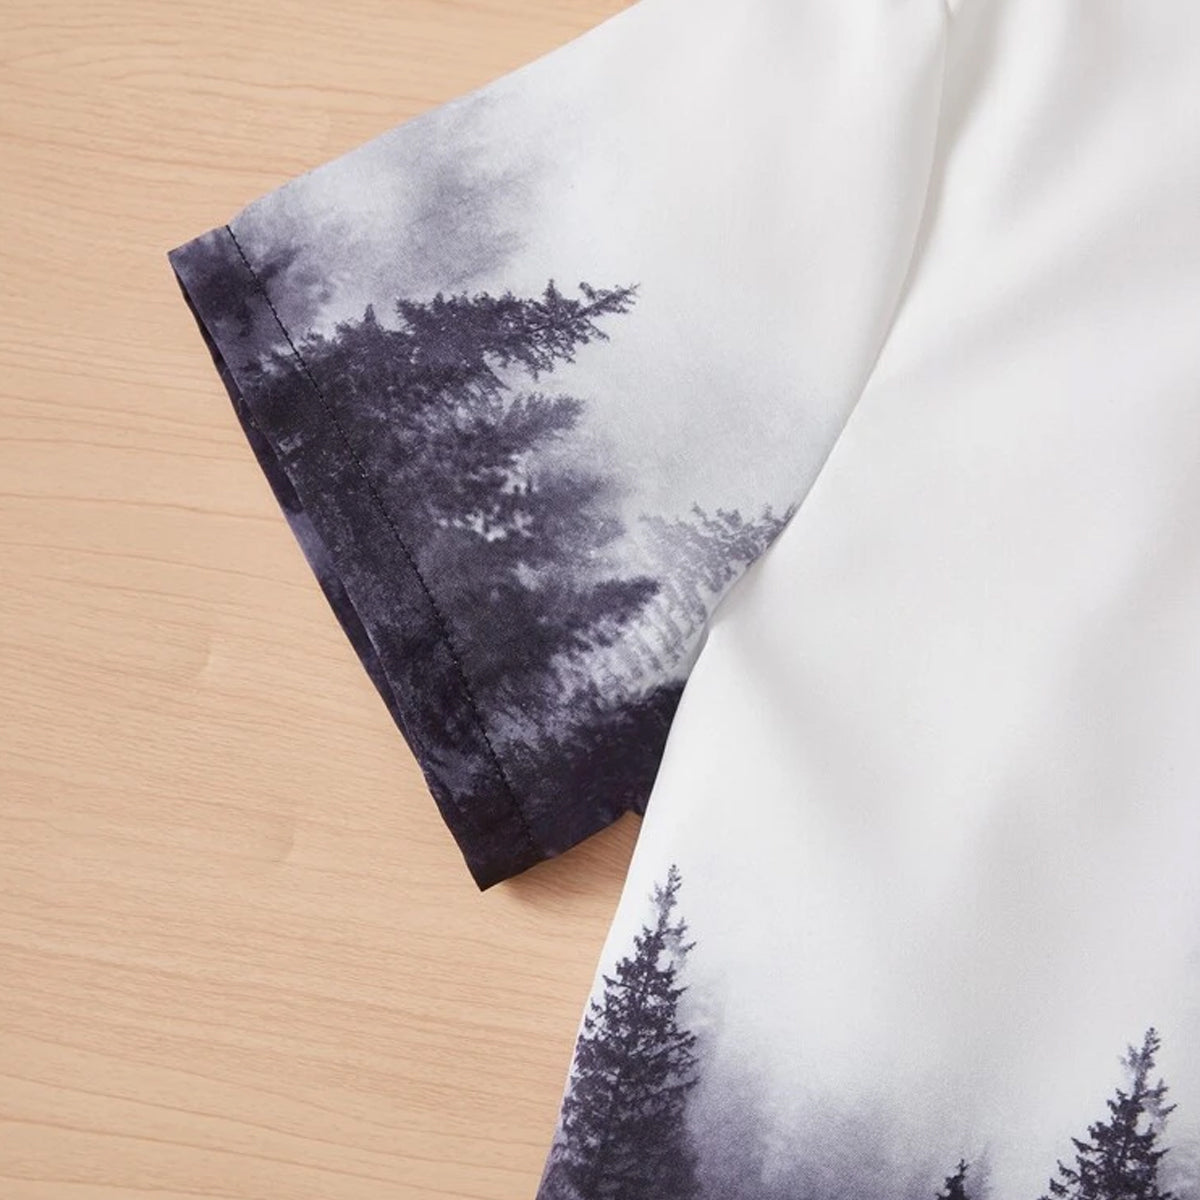 Venutaloza Outdoor Casual Tree Gradient Graphic Short Sleeve Shirt For Boys.